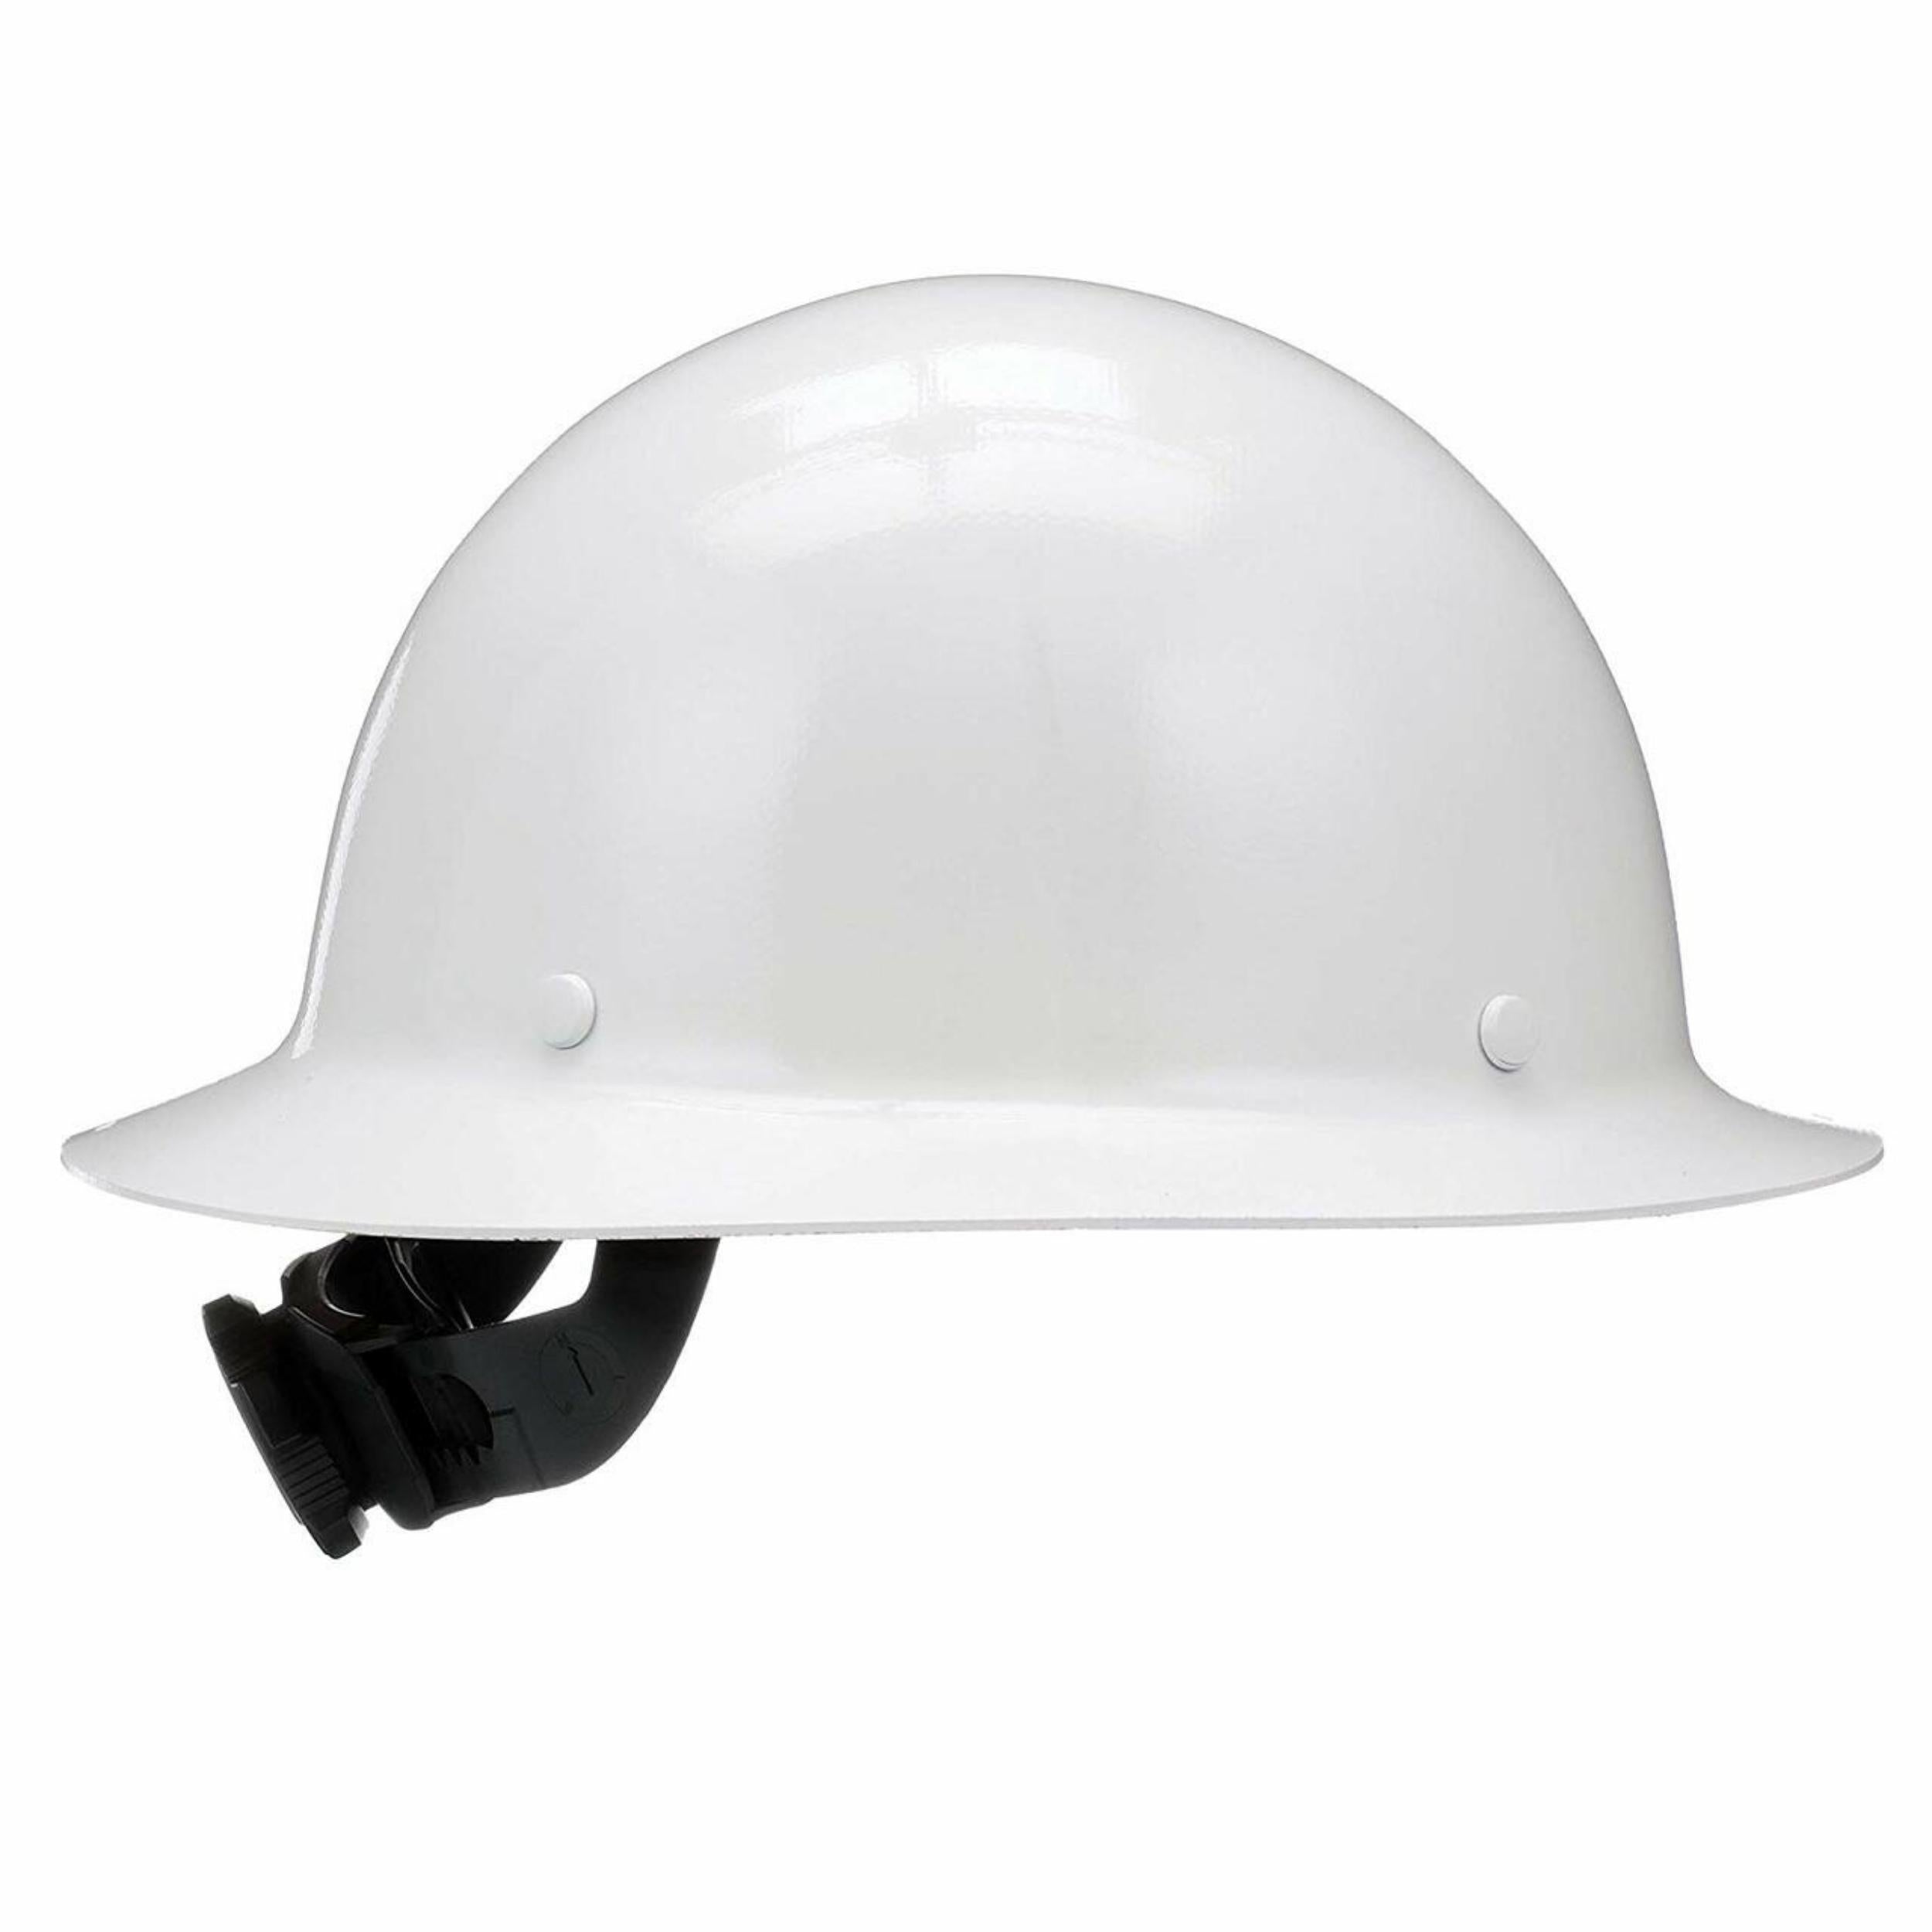 Skullgard Protective Hat White - 475408 W/ Fas-Trac III Suspension, Standard